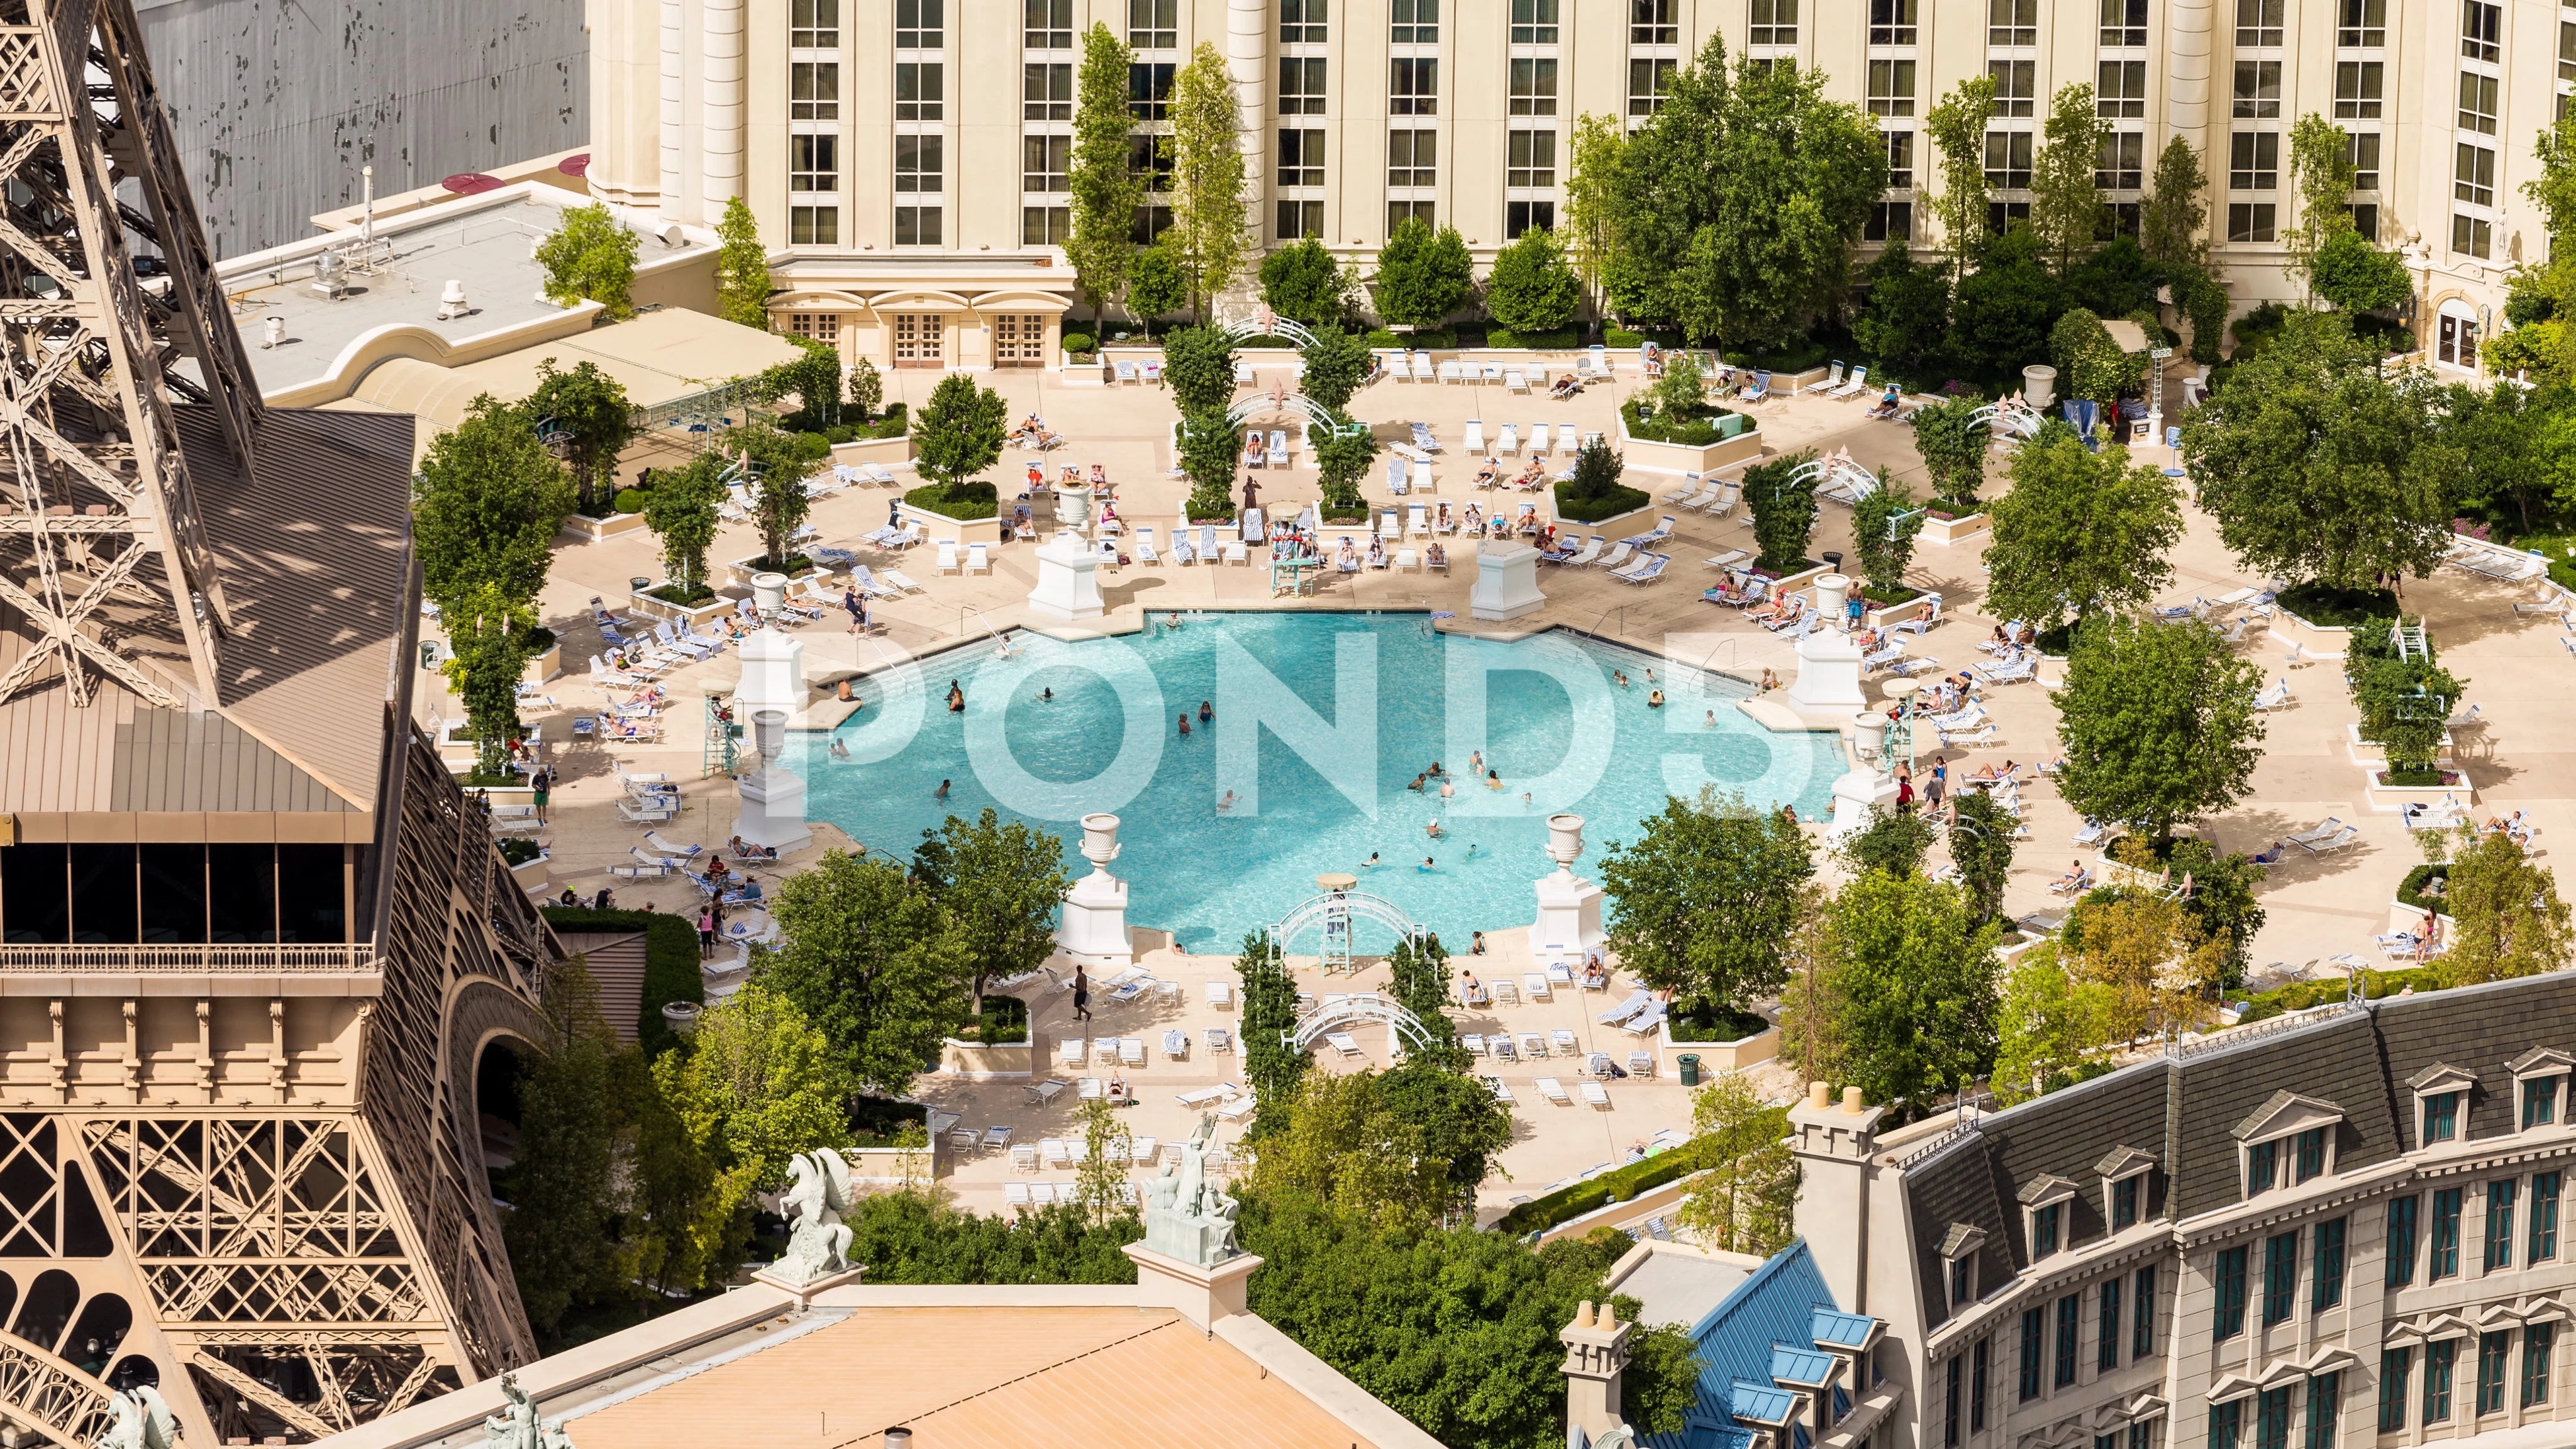 Paris Las Vegas: Pools 